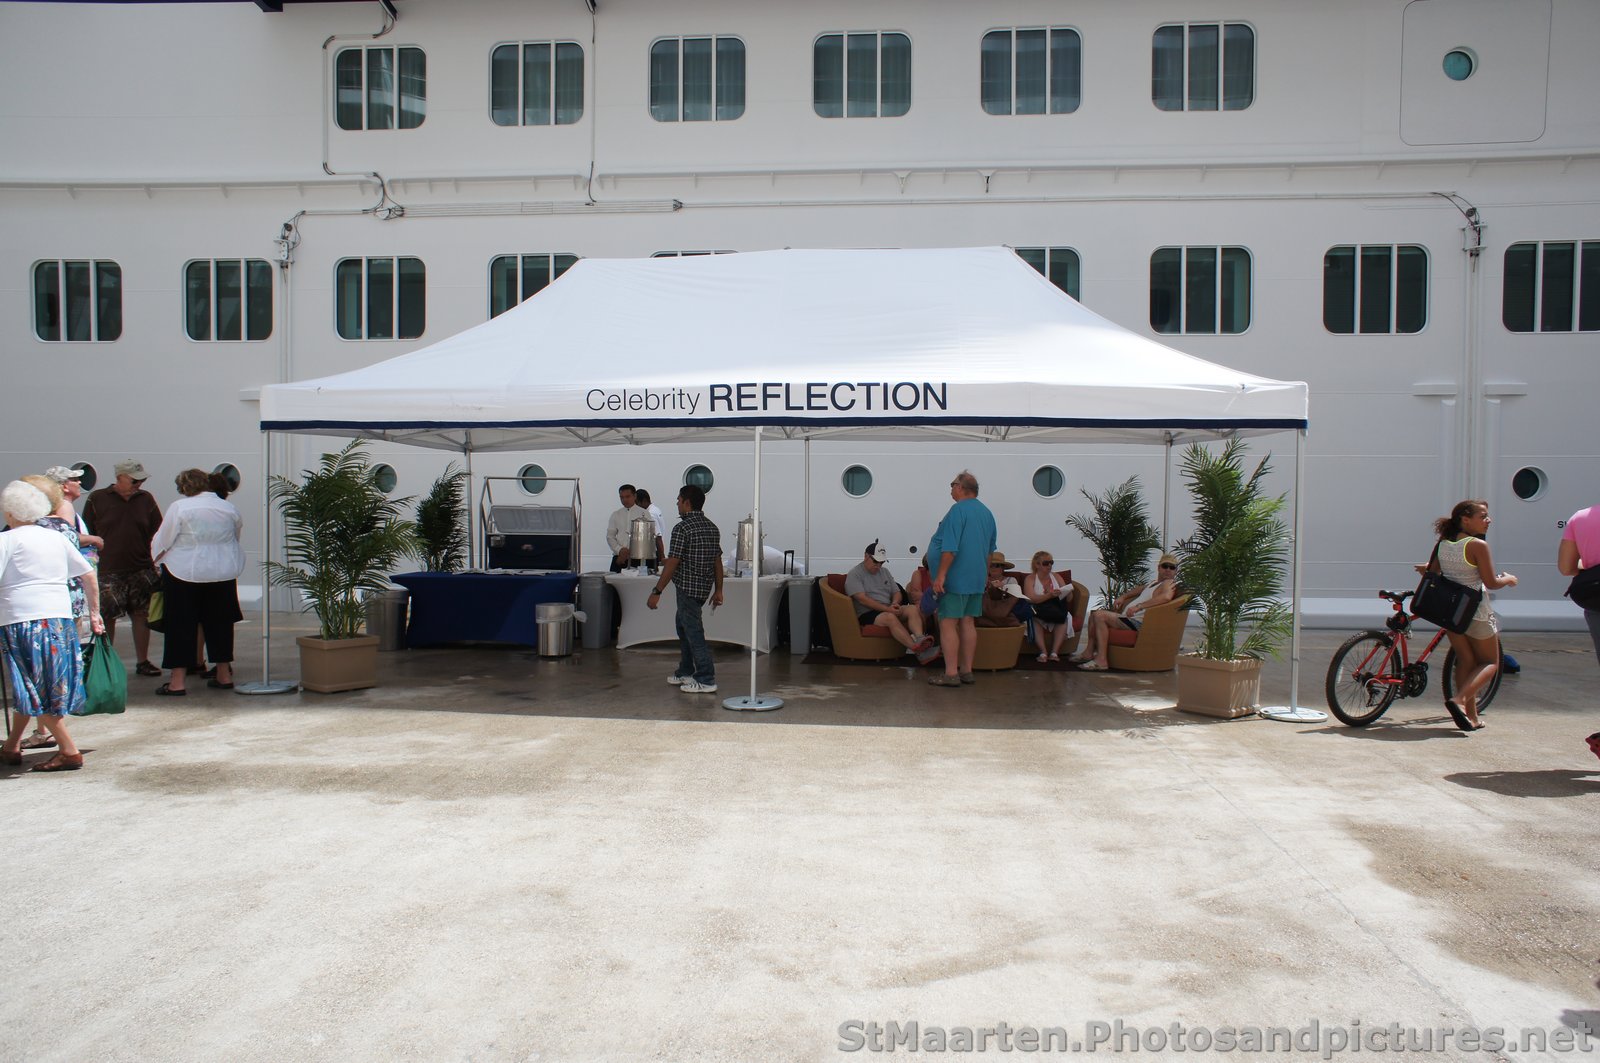 Celebrity Reflection tent at St Maarten.jpg
